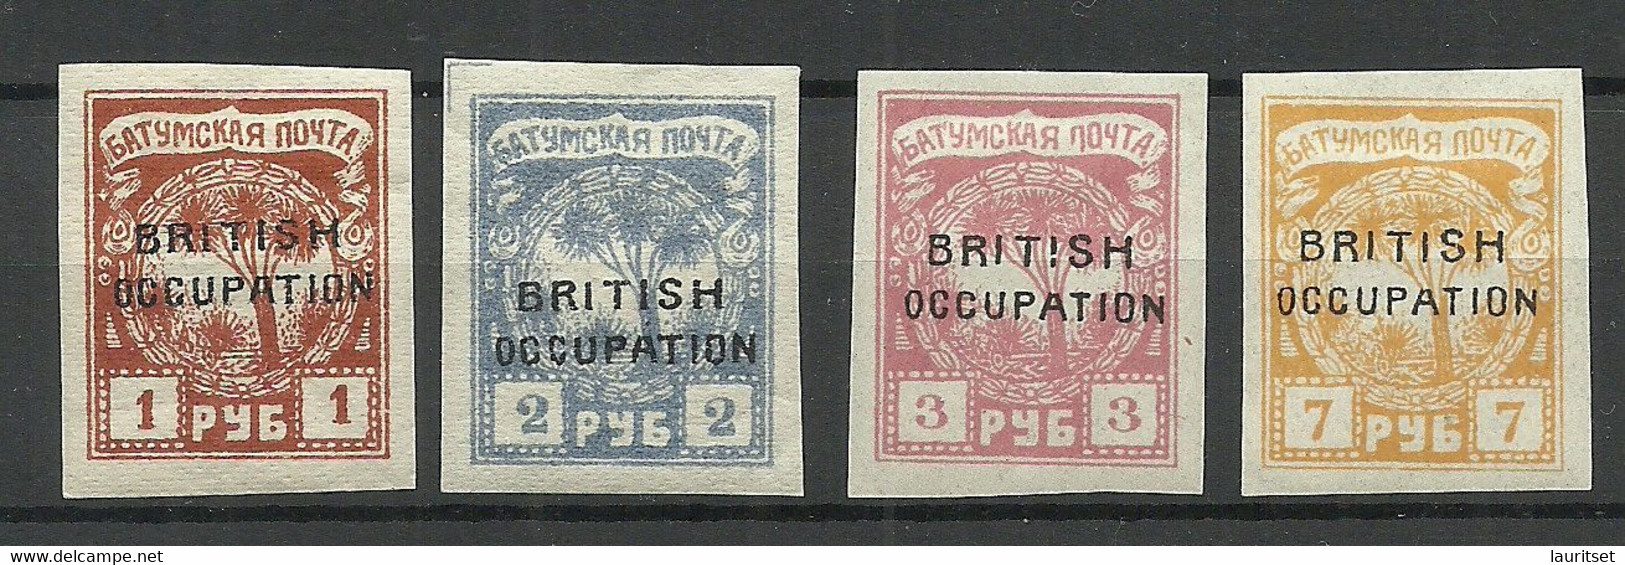 BATUM Batumi RUSSLAND RUSSIA 1919 British Occupation, 4 Stamps,* - 1919-20 Occupation: Great Britain